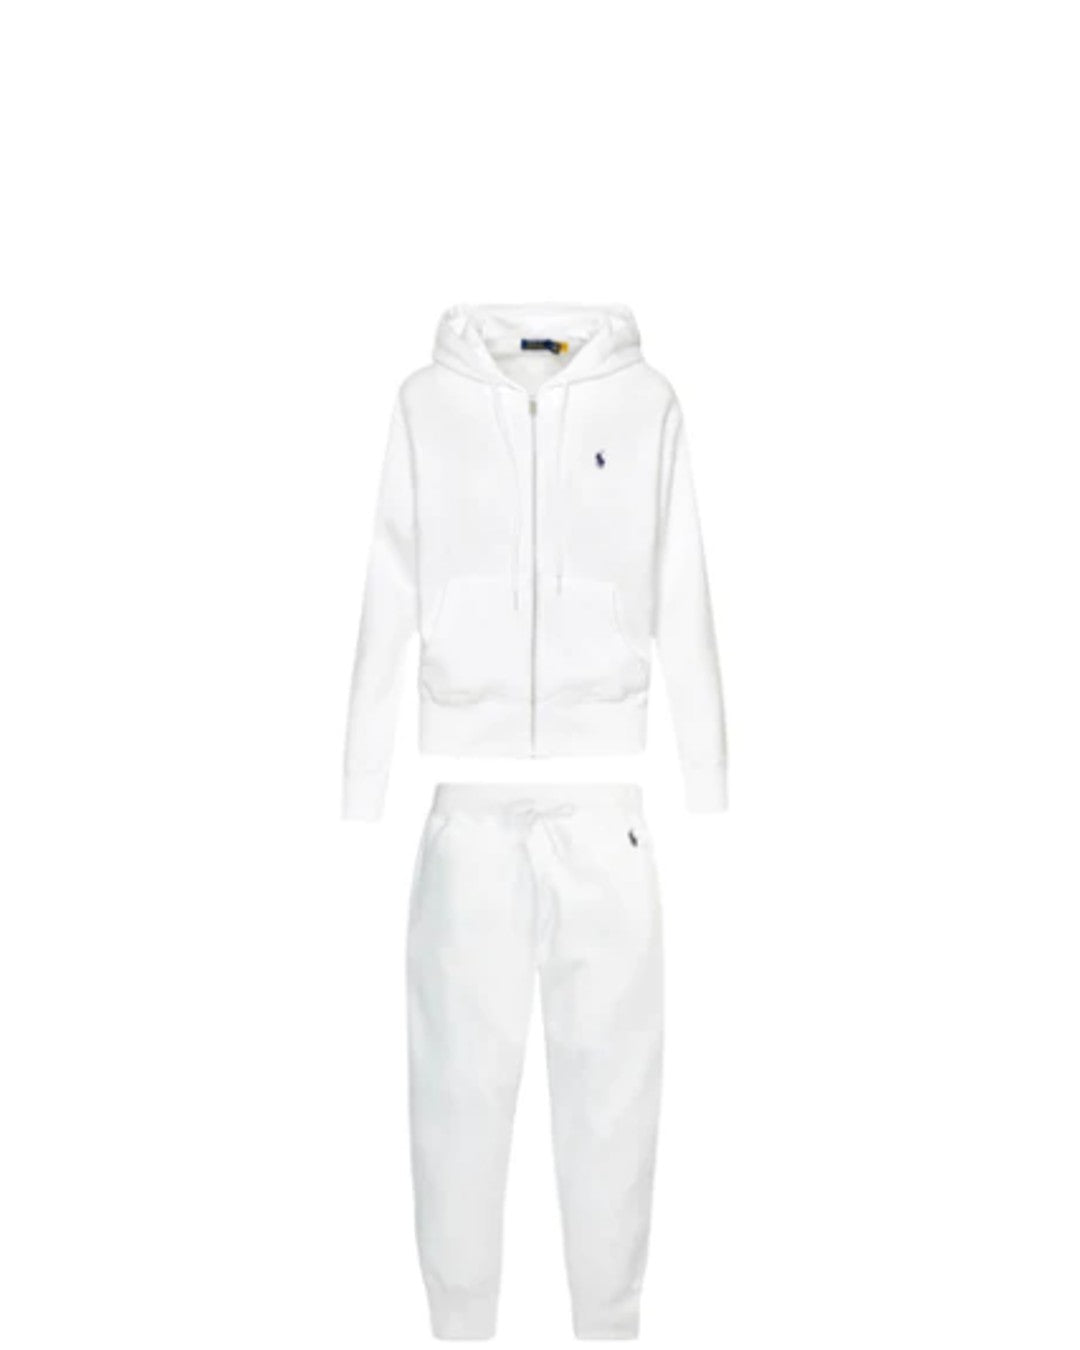 Polo by Ralph Lauren, Pants, Polo Ralph Lauren Tracksuit White Set